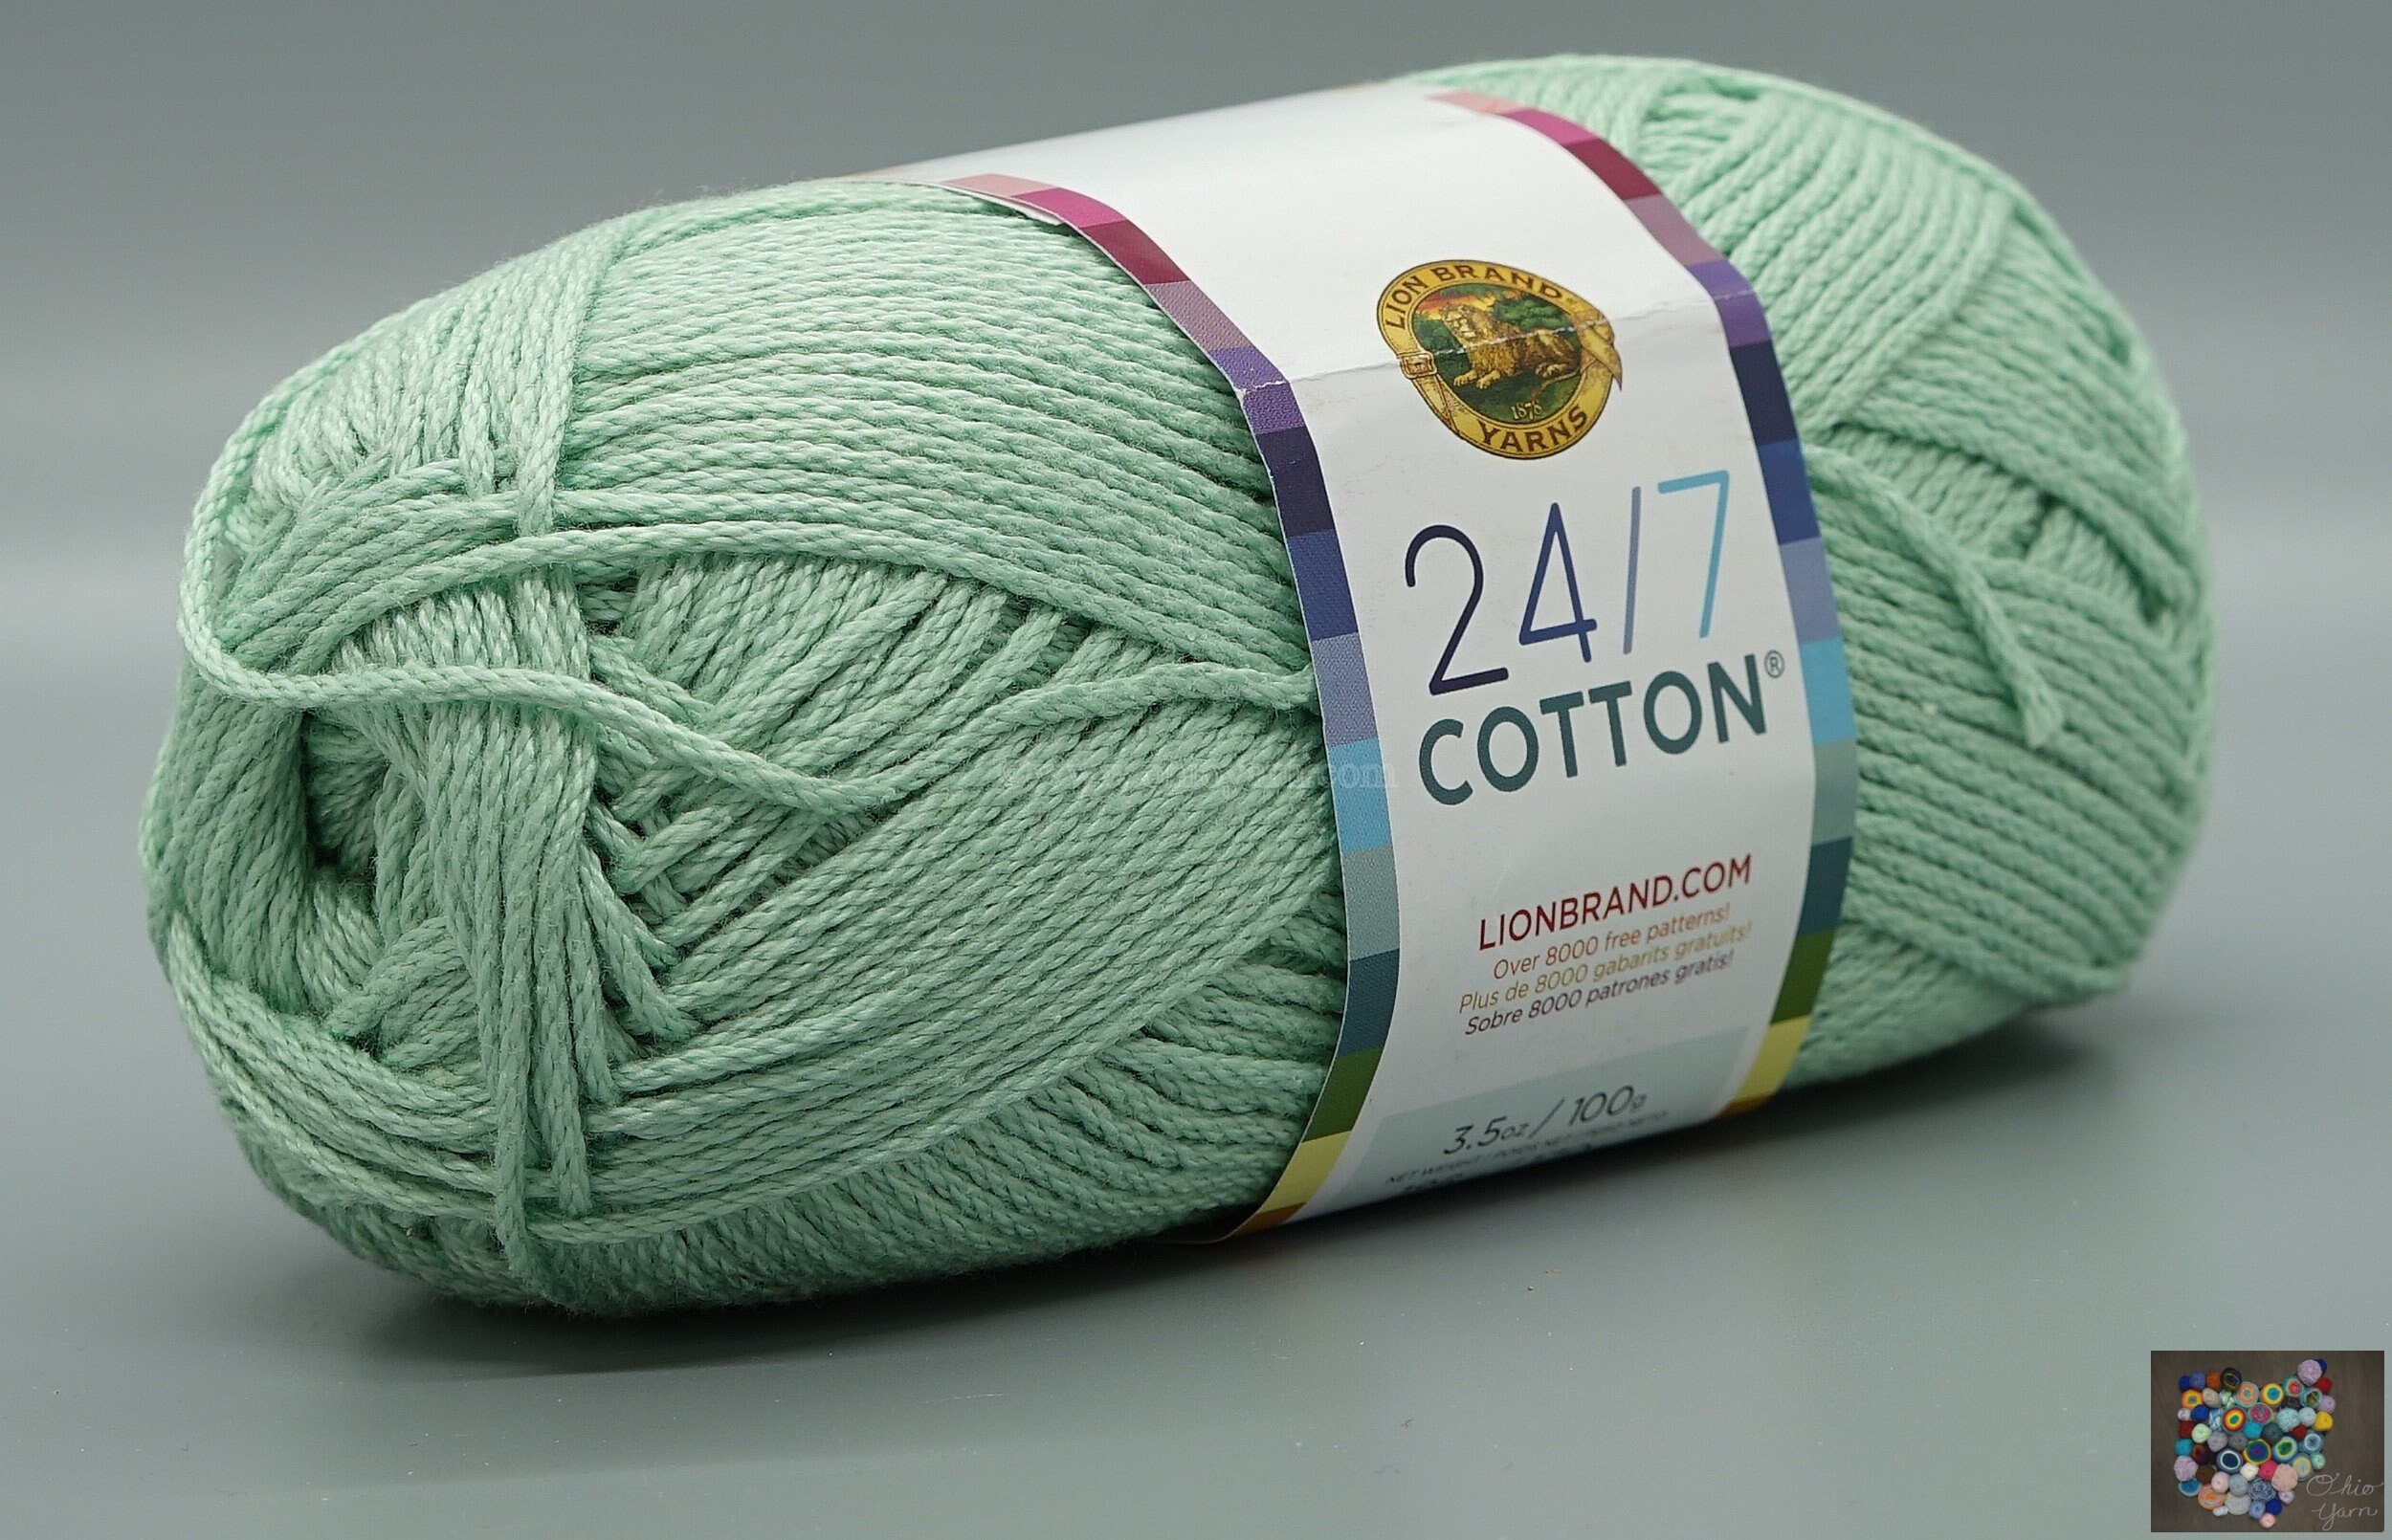 Lion Brand 24/7 Cotton 156 Mint Yarn 100% Mercerized Cotton 